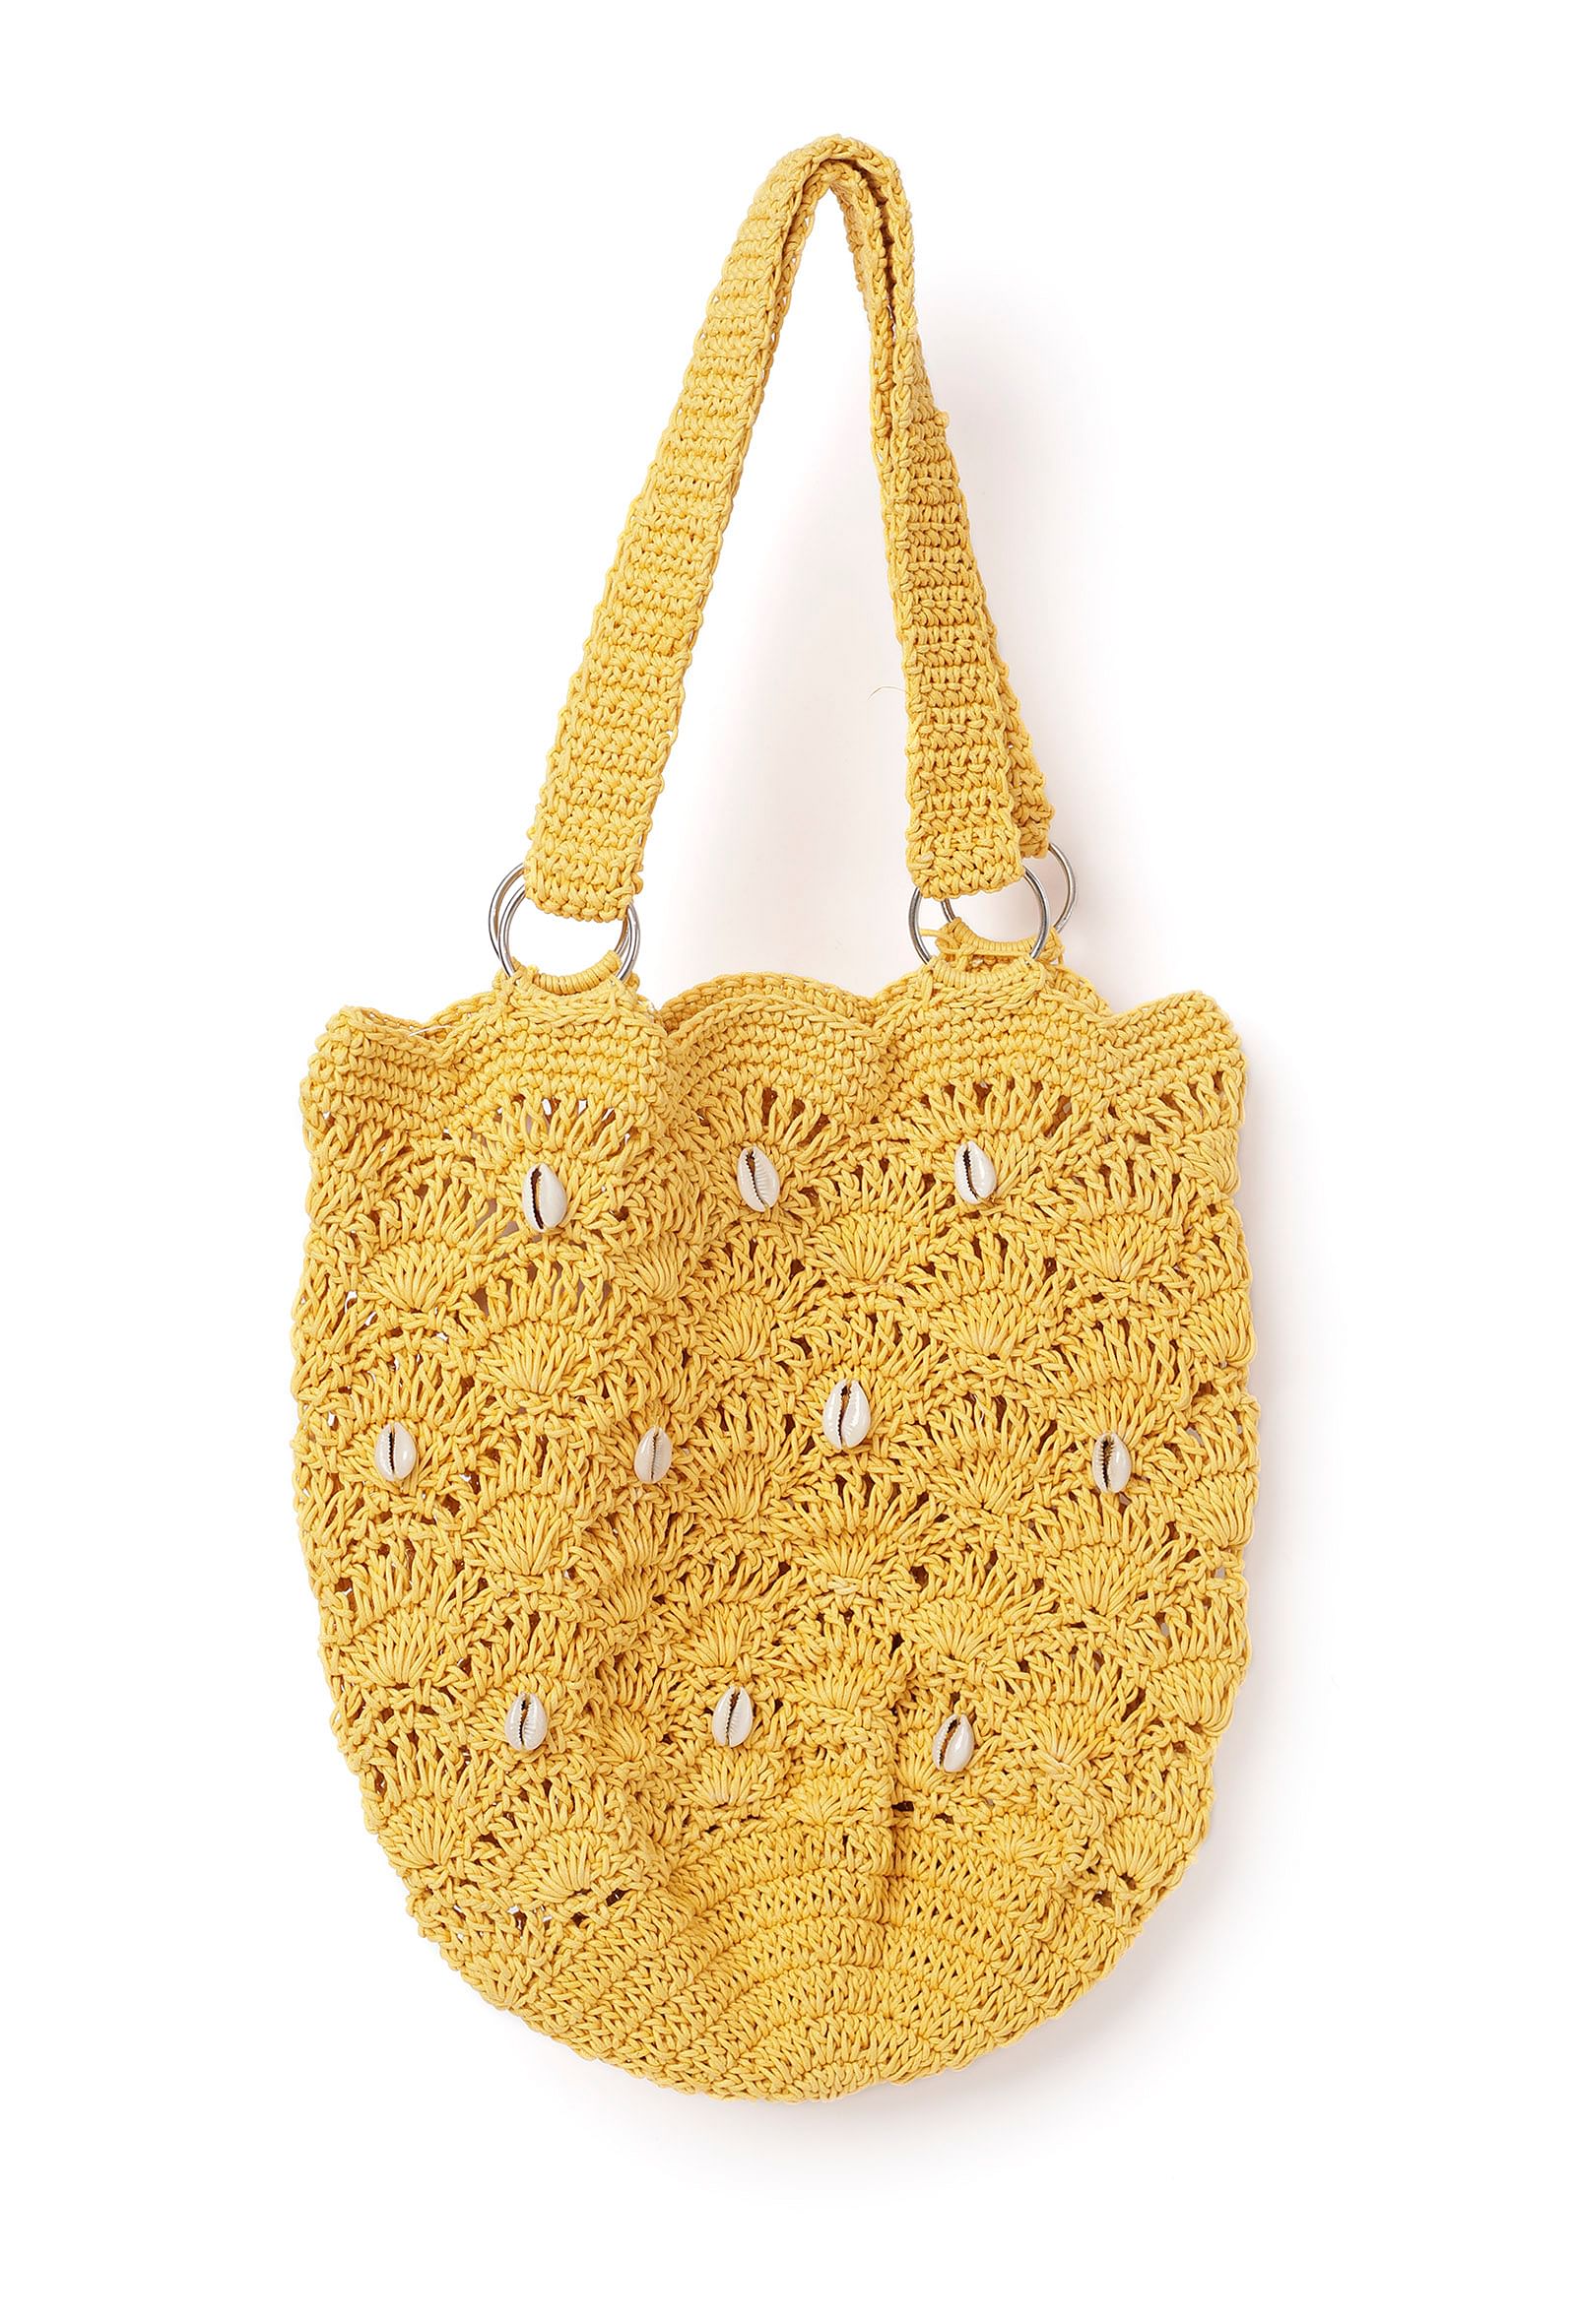 Macrame Handbag With Bamboo Handles small Macrame Purse Drawstring Cotton  Liner Boho Inspired Fashion Unique Gift Idea - Etsy